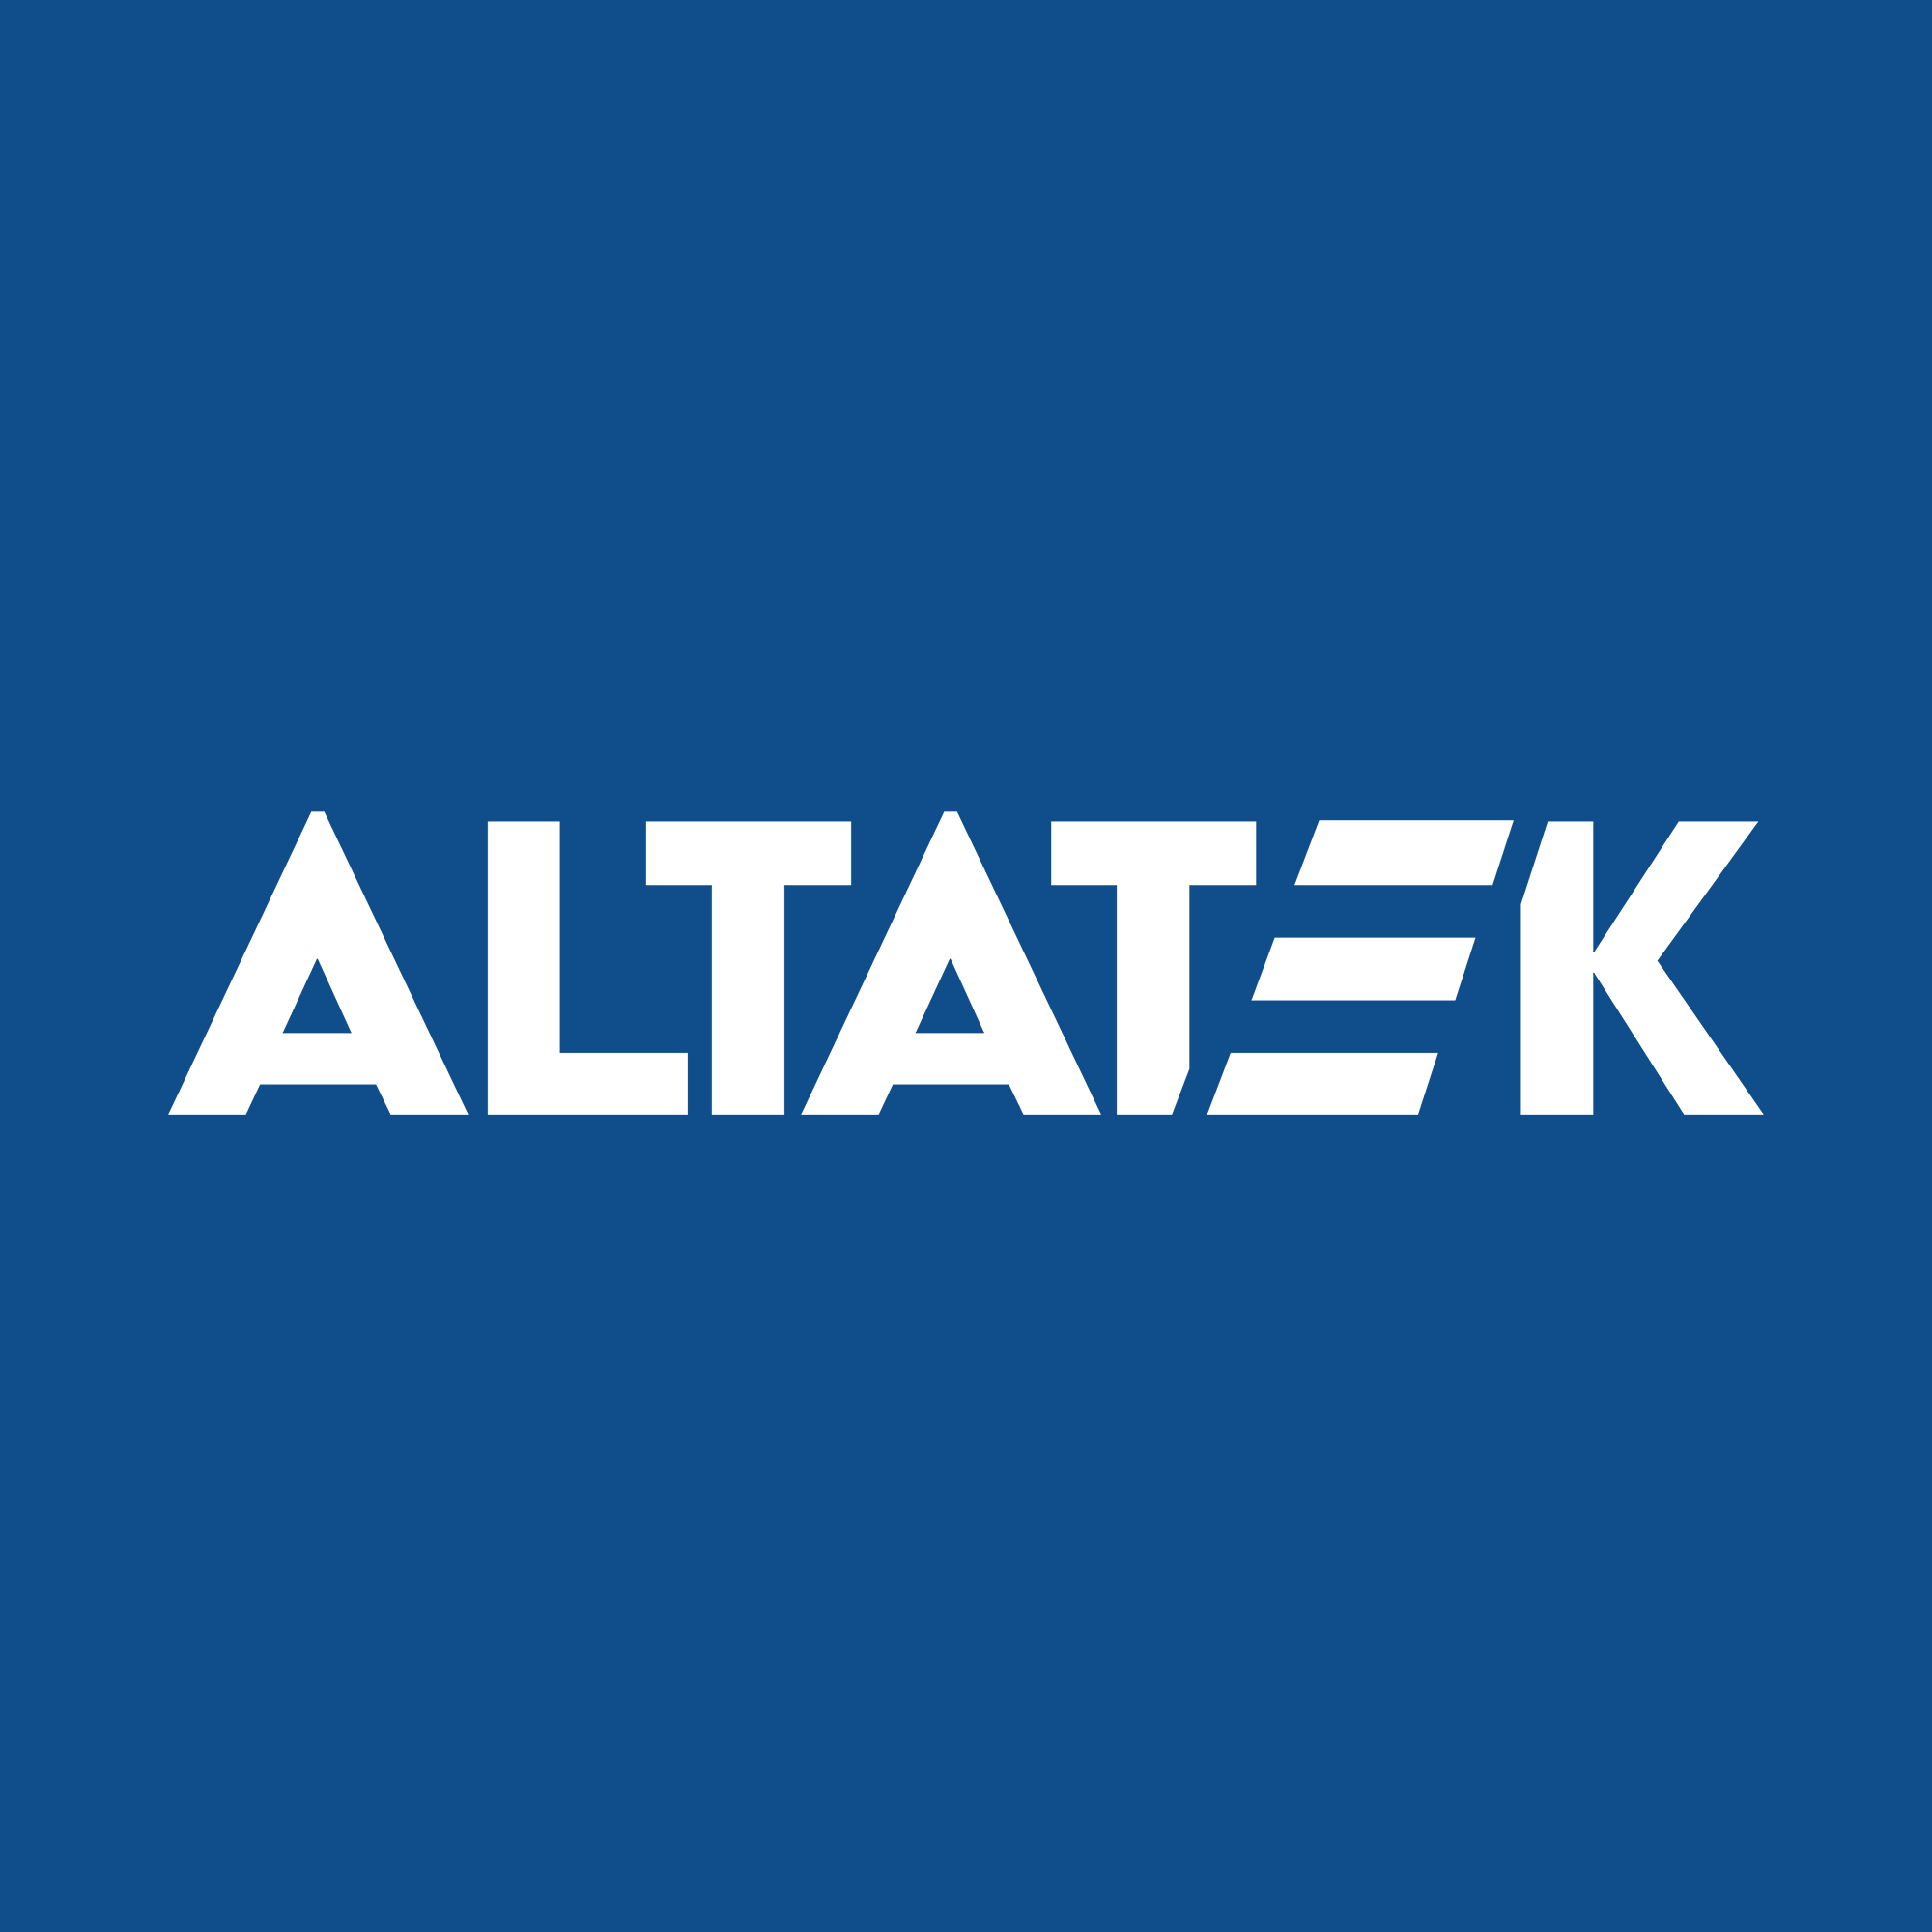 Altatek Racing